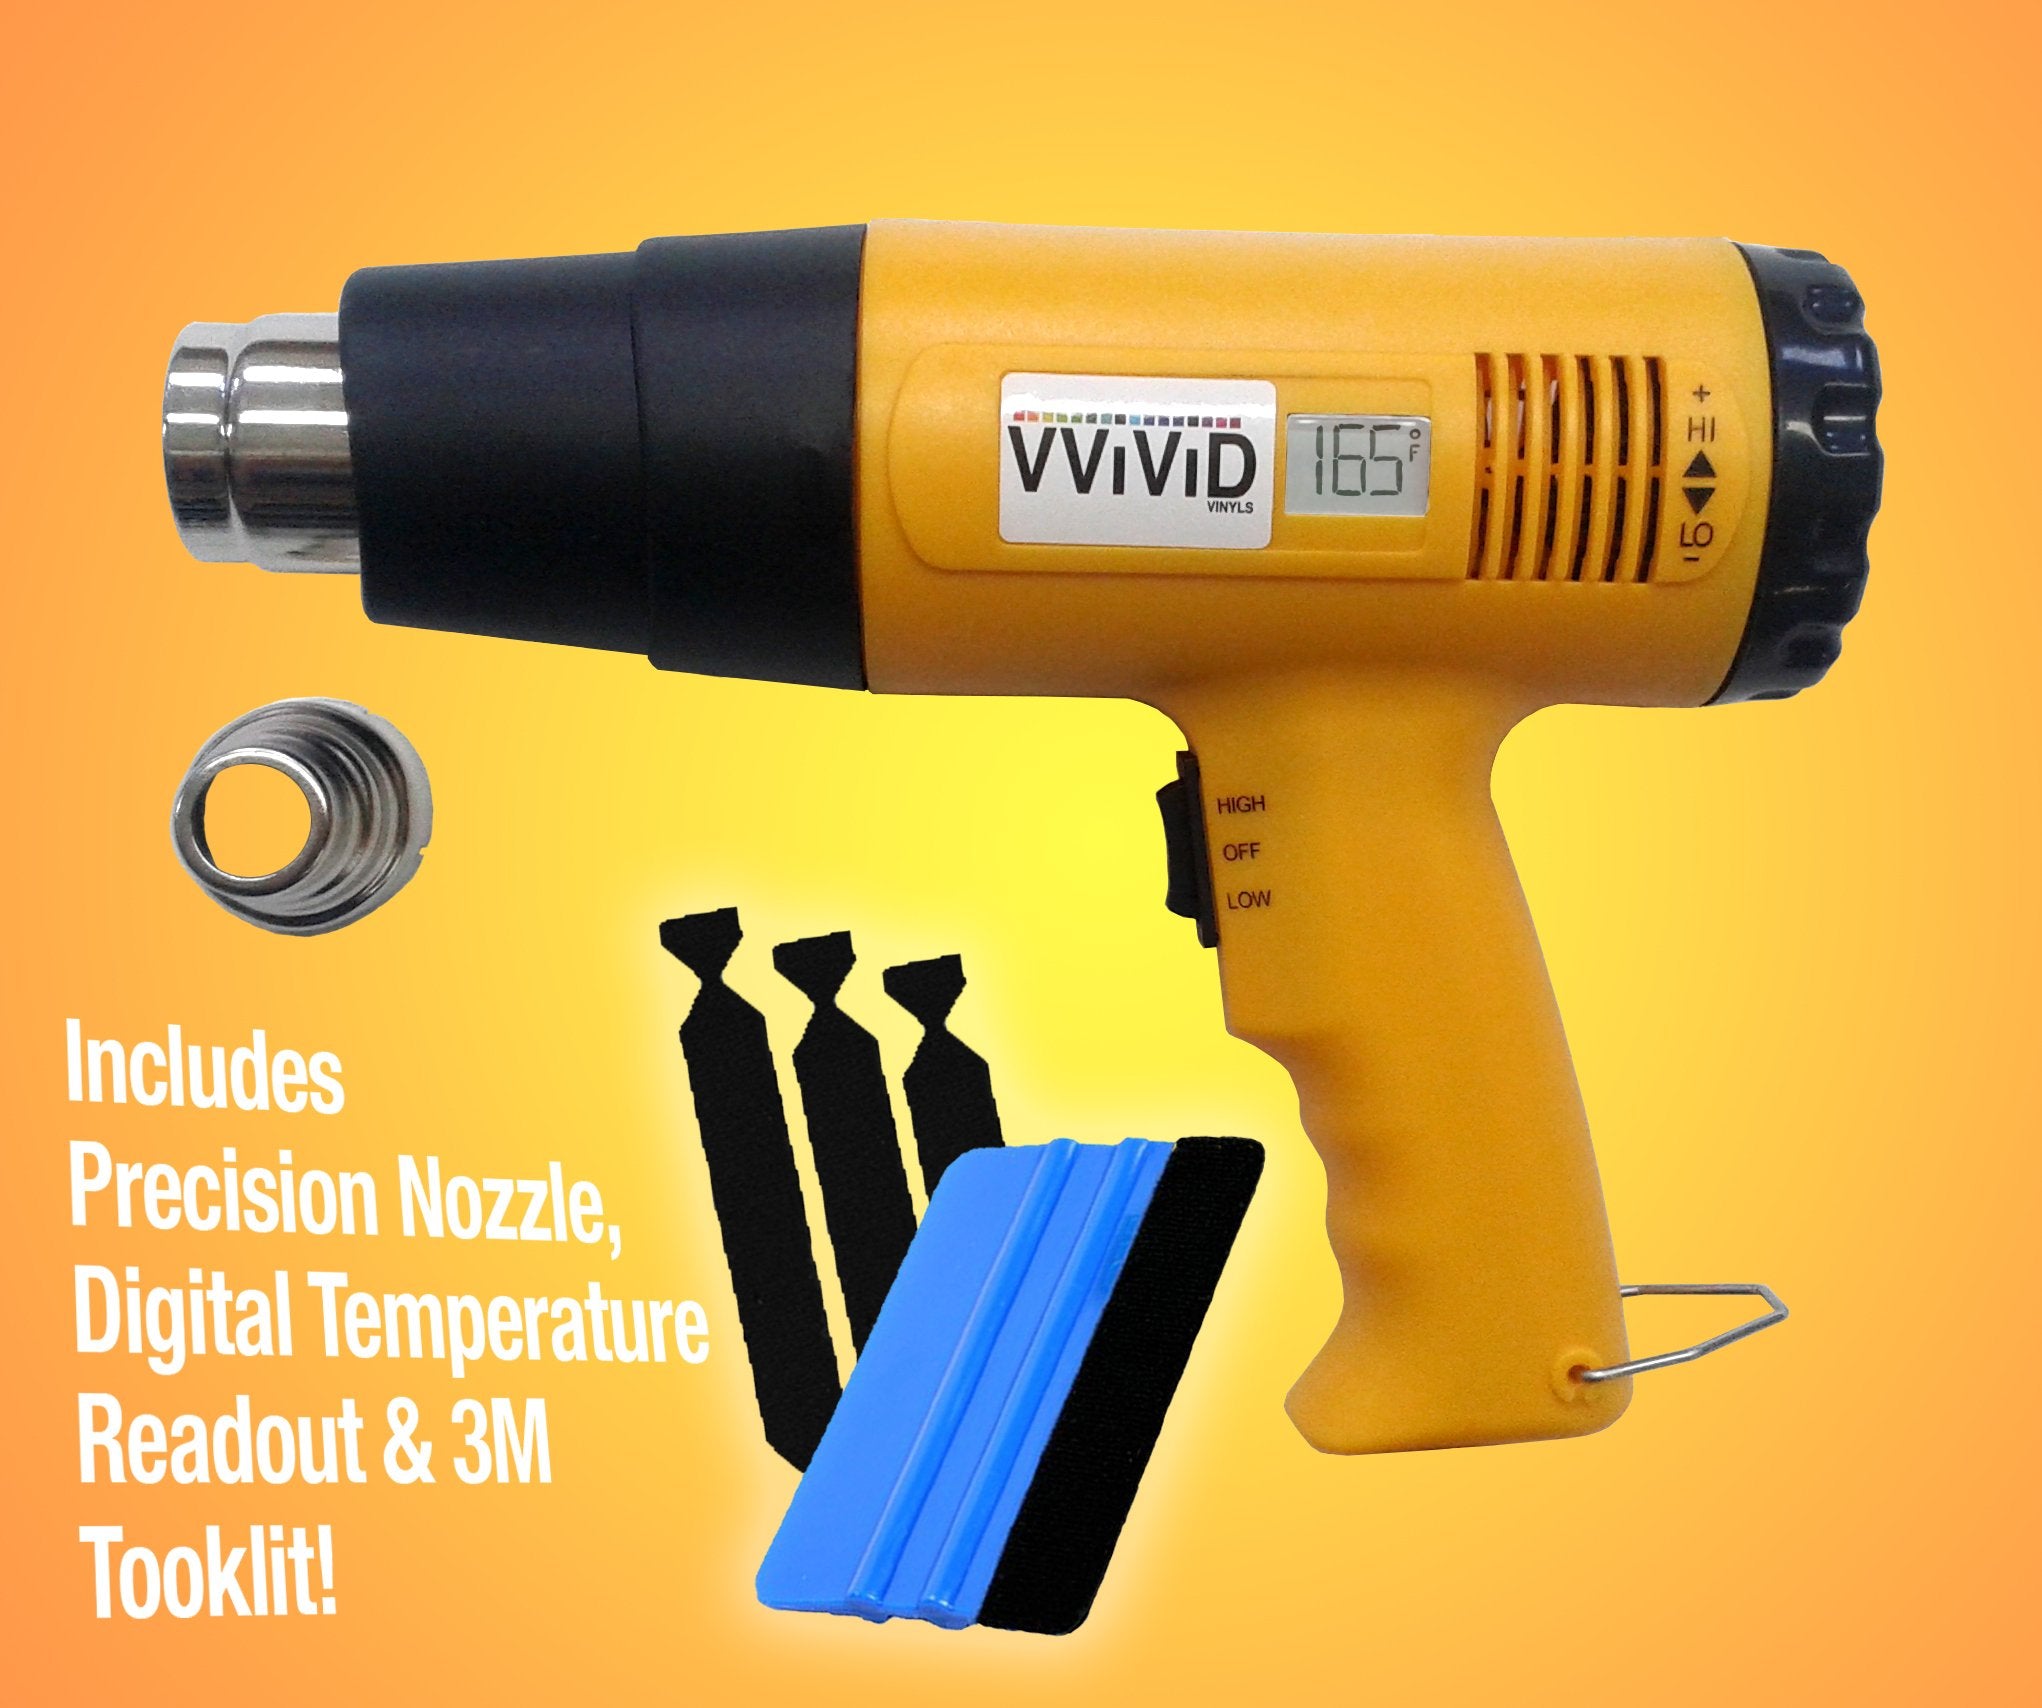 VViViD Professional Heat Gun Automotive Vinyl Wrap Tool Including Precision Nozzle, Digital Temperature Readout and 3M Toolkit